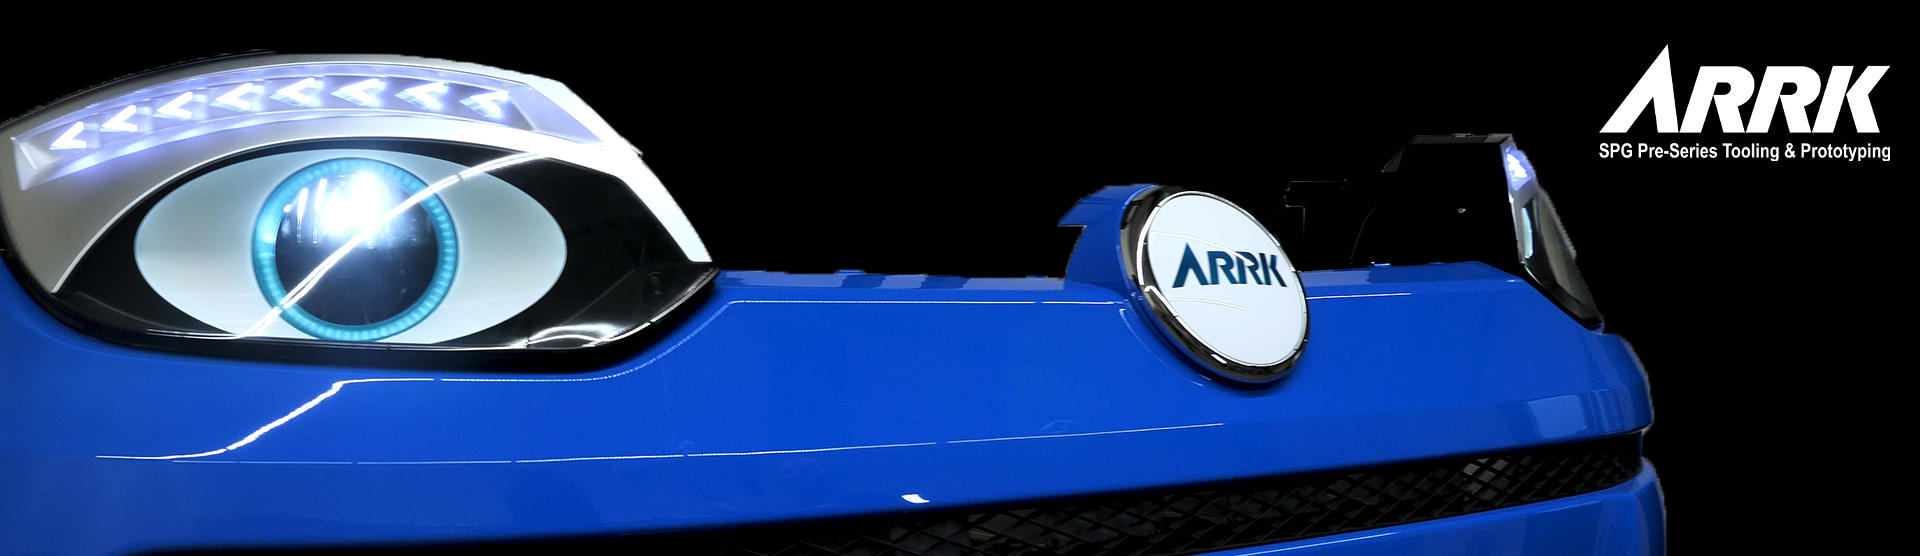 ARRK | SPG Pre-Series Tooling & Prototyping B.V